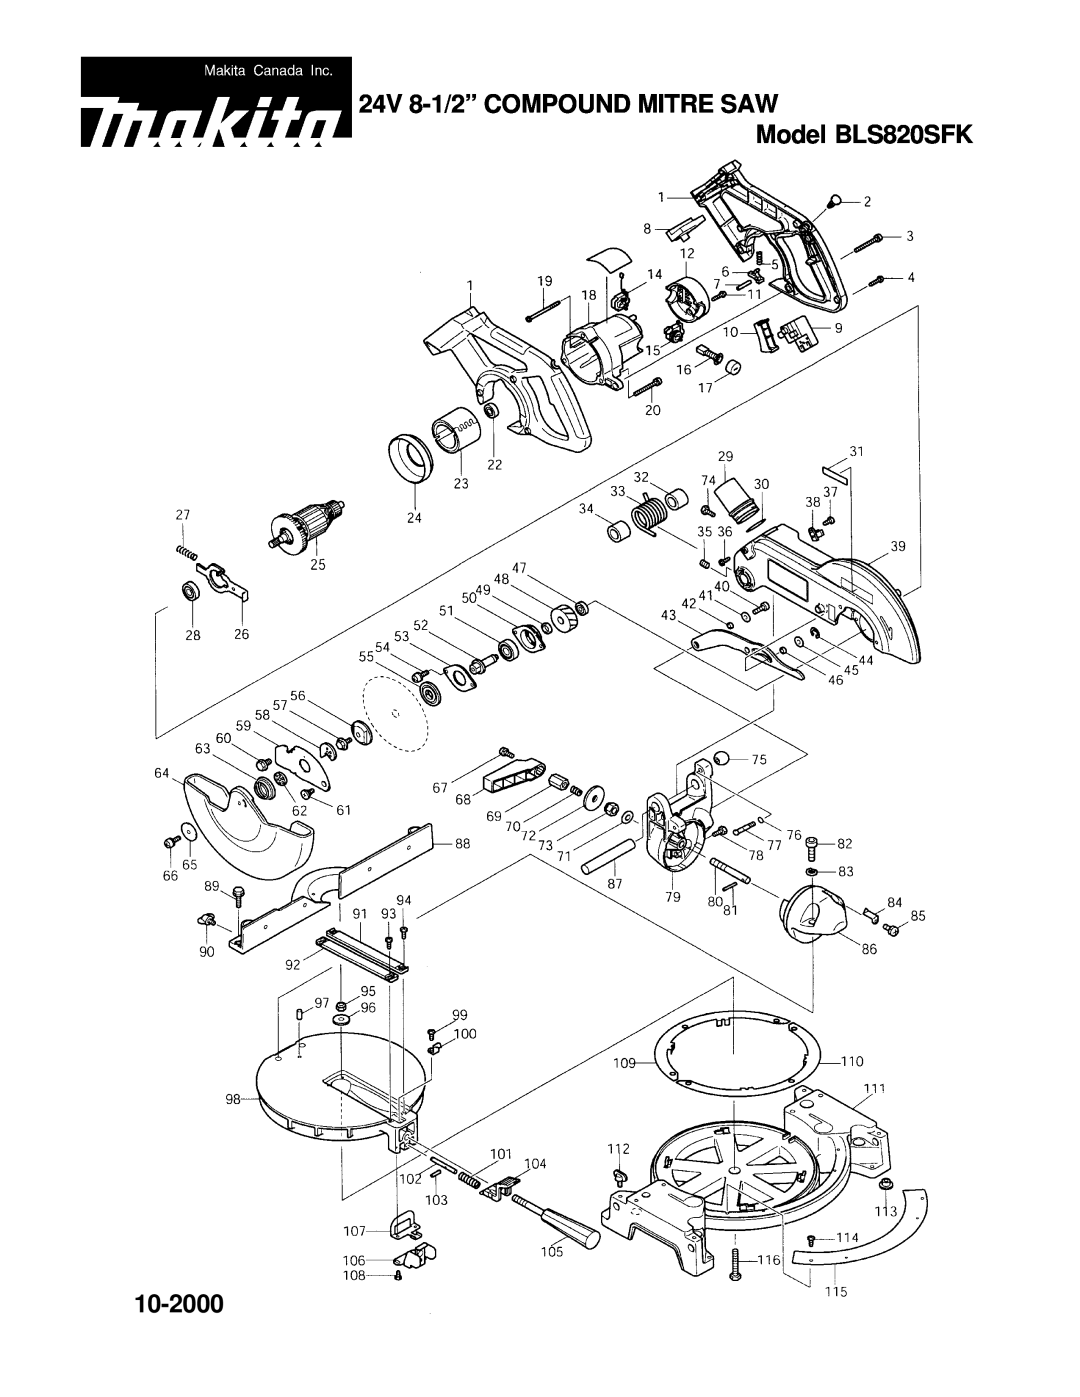 Makita manual 24V 8-1/2” COMPOUND MITRE SAW Model BLS820SFK, 10-2000 